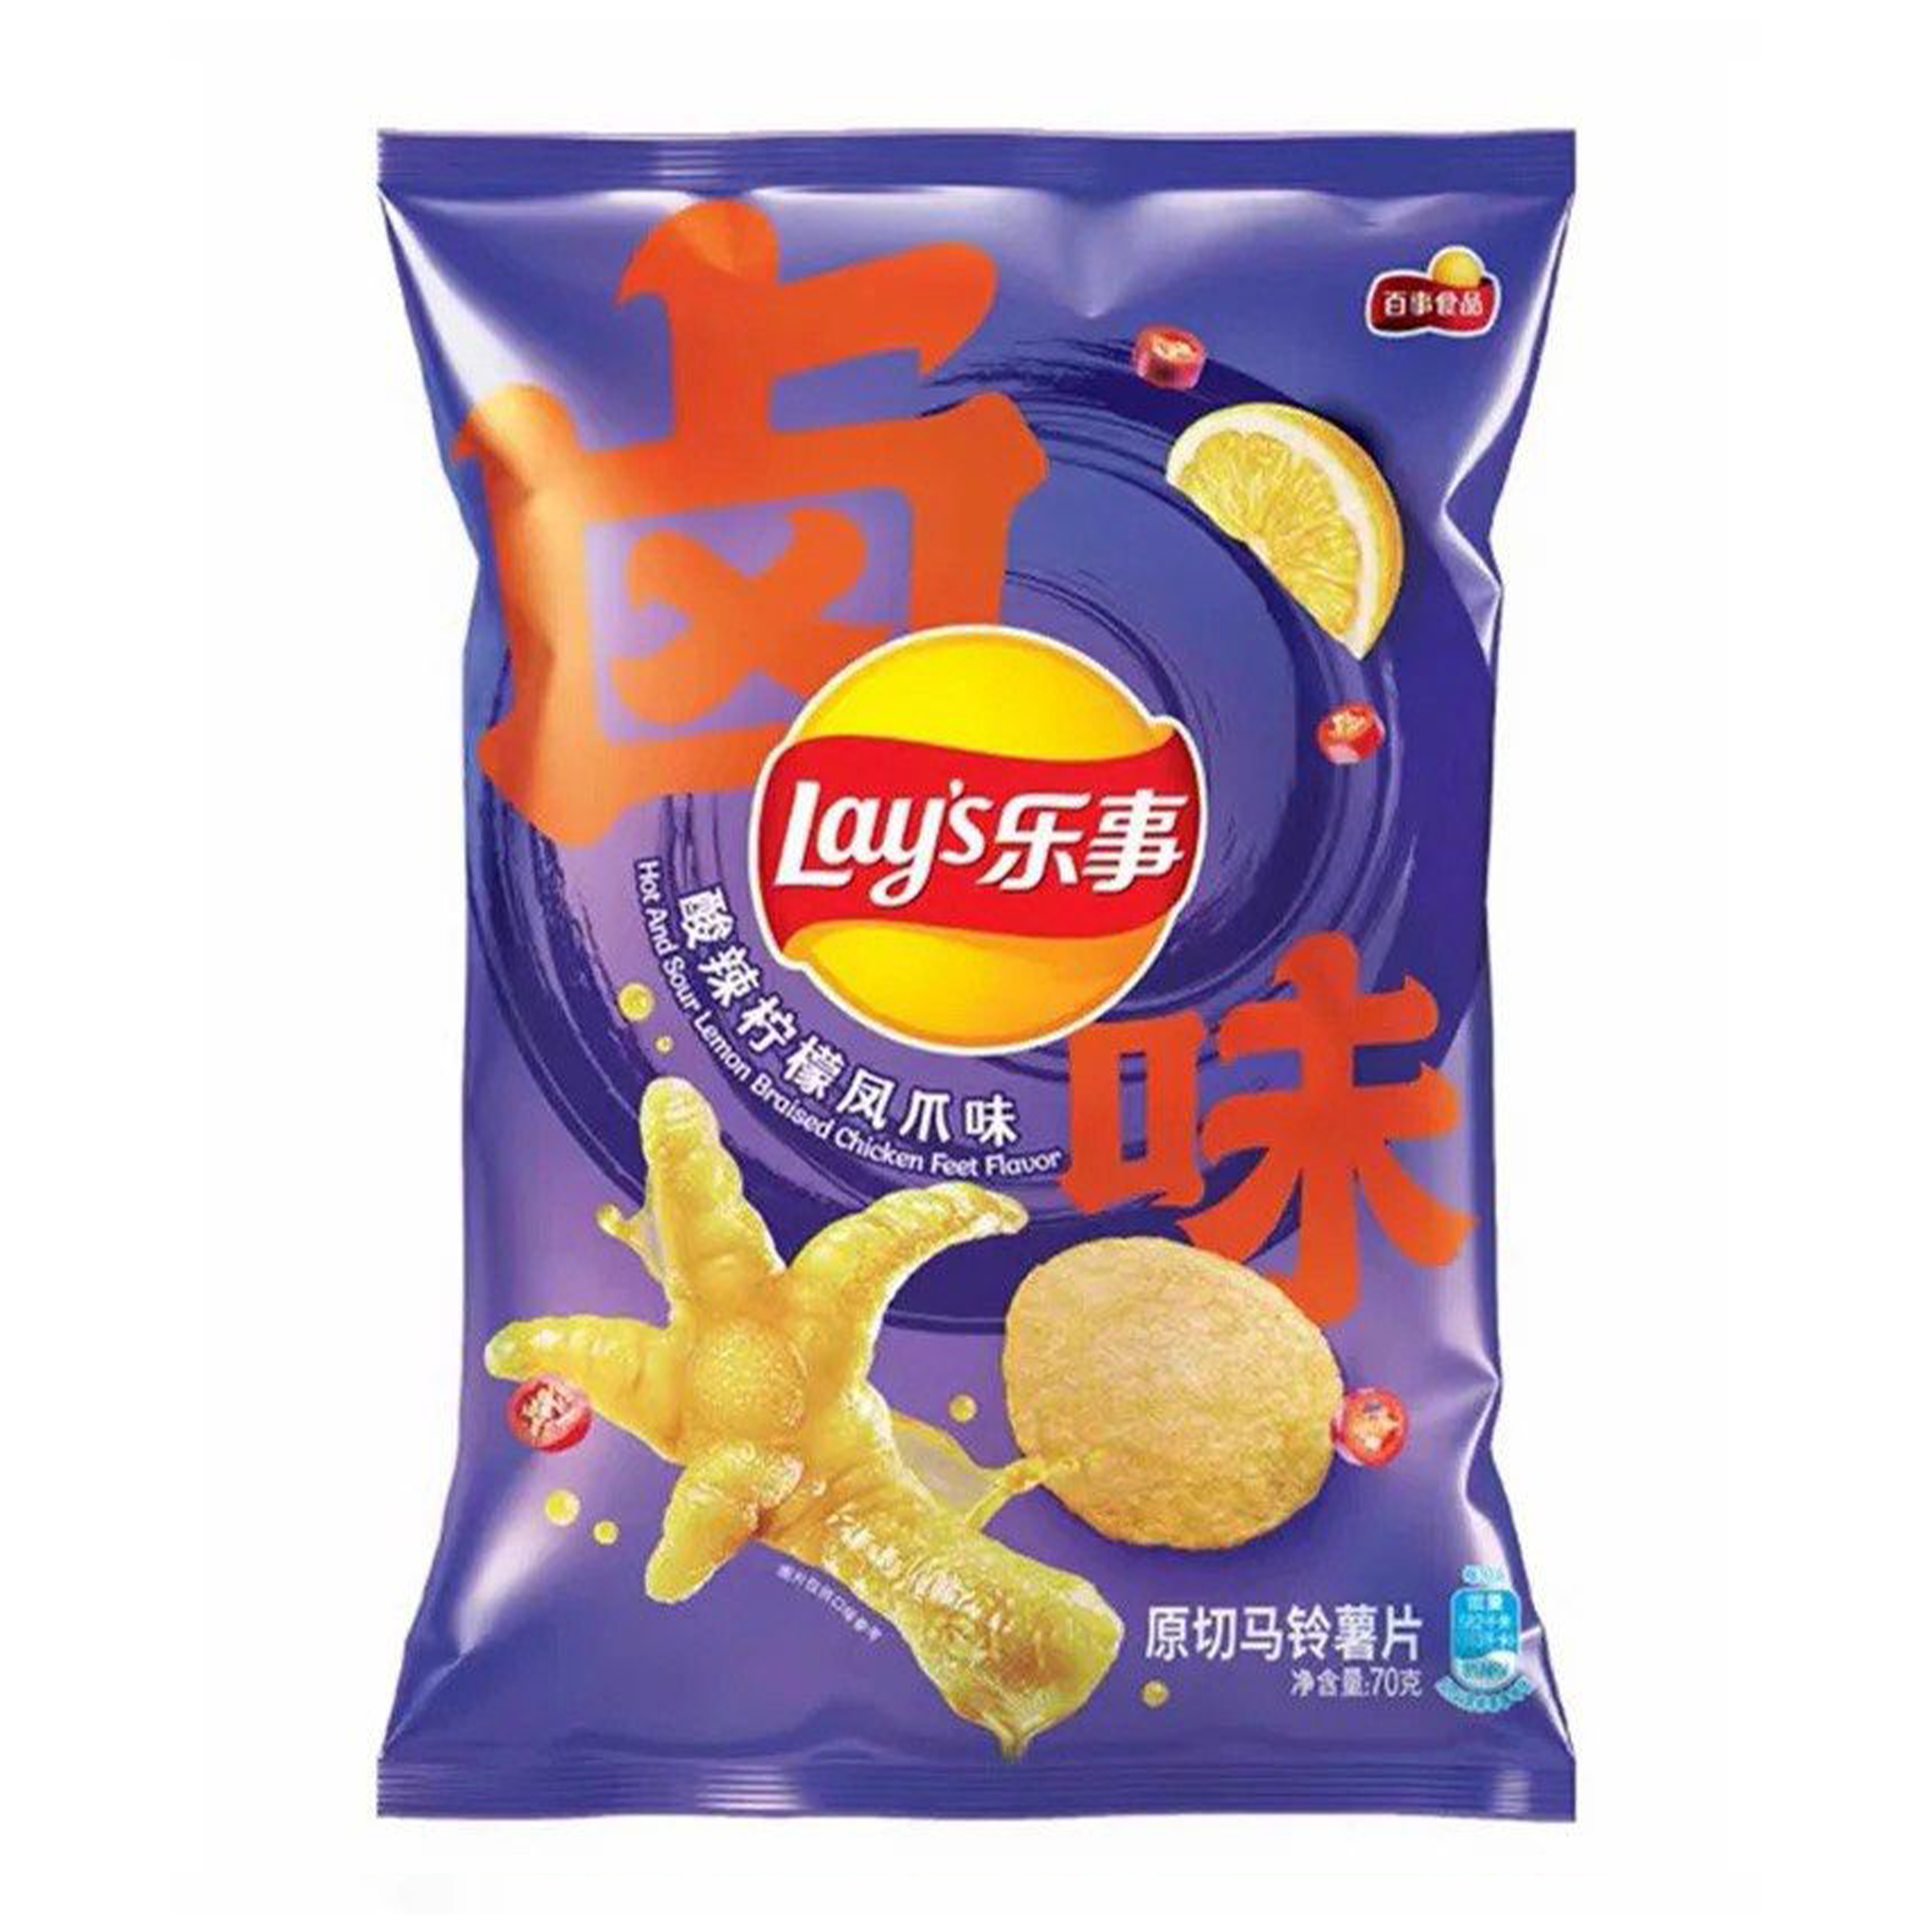 Lay's - Hot & Sour Lemon Brasied Duck Feet Flavour (Asia)